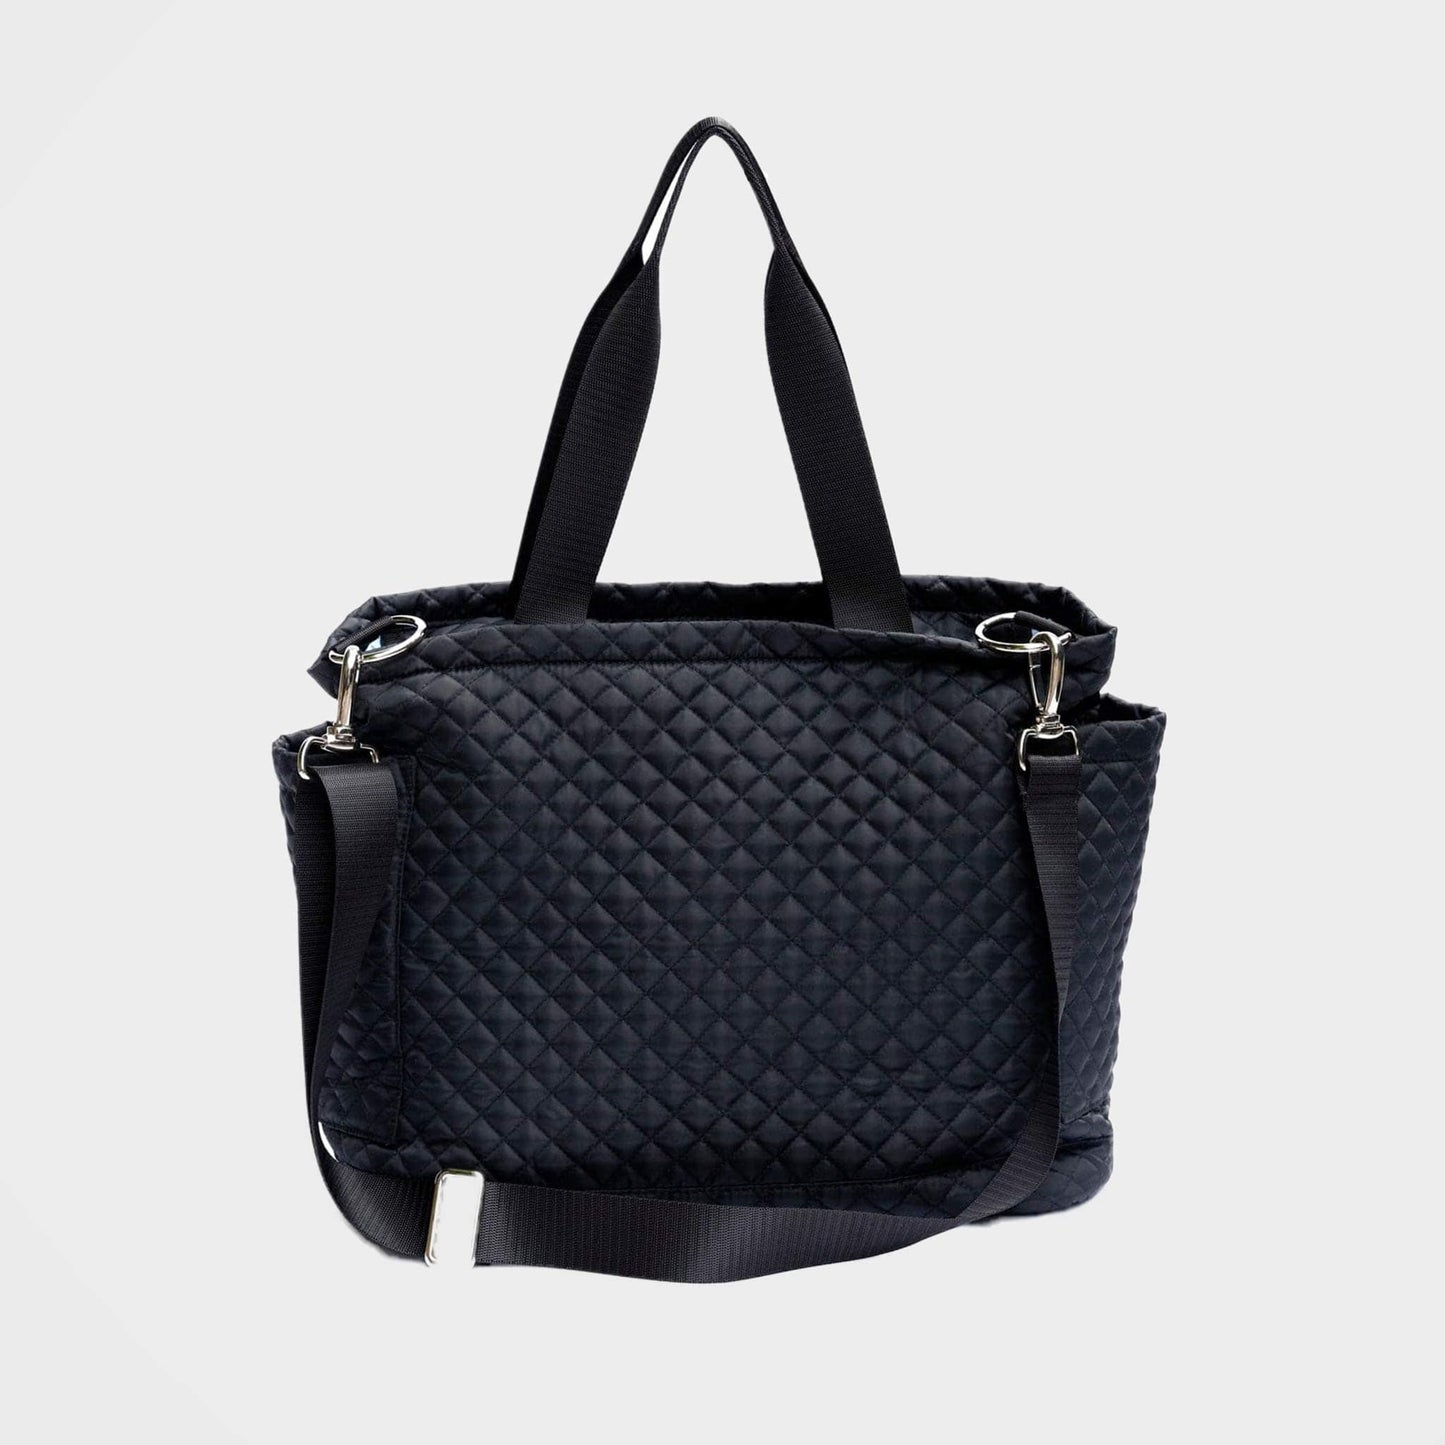 Women's Handbag, Lilly | Black - By ASK